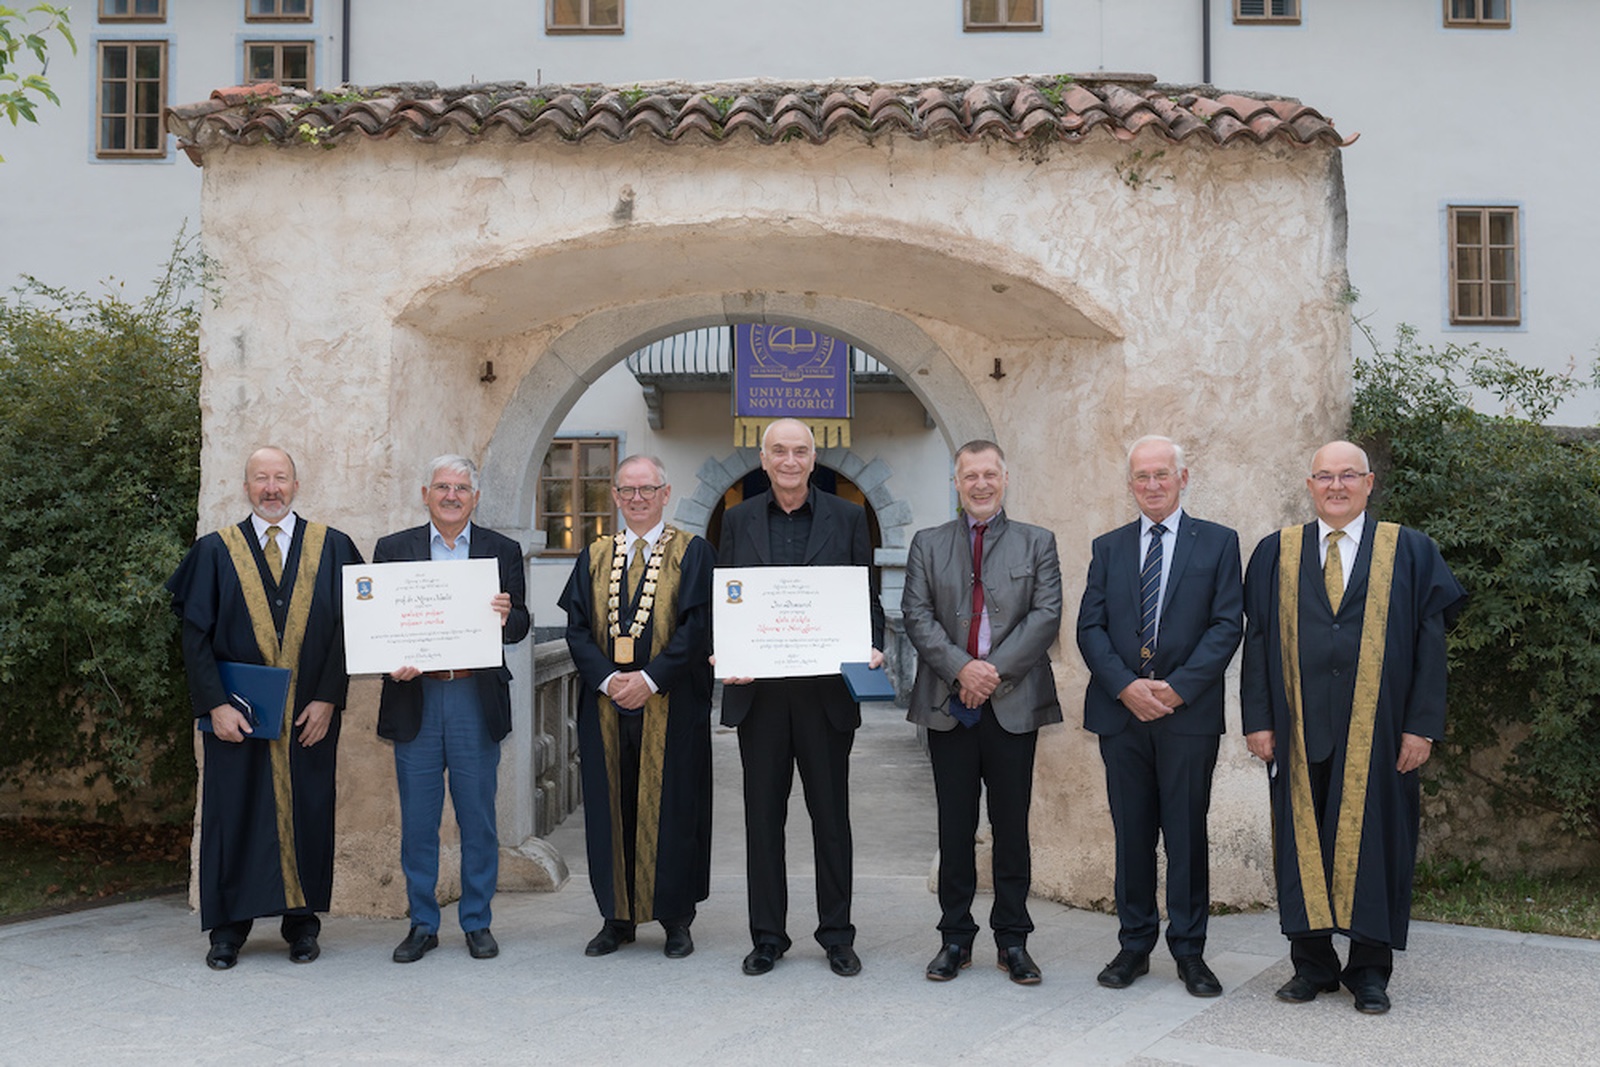 Awardees and administration of the University of Nova Gorica. Photo: Miha Godec